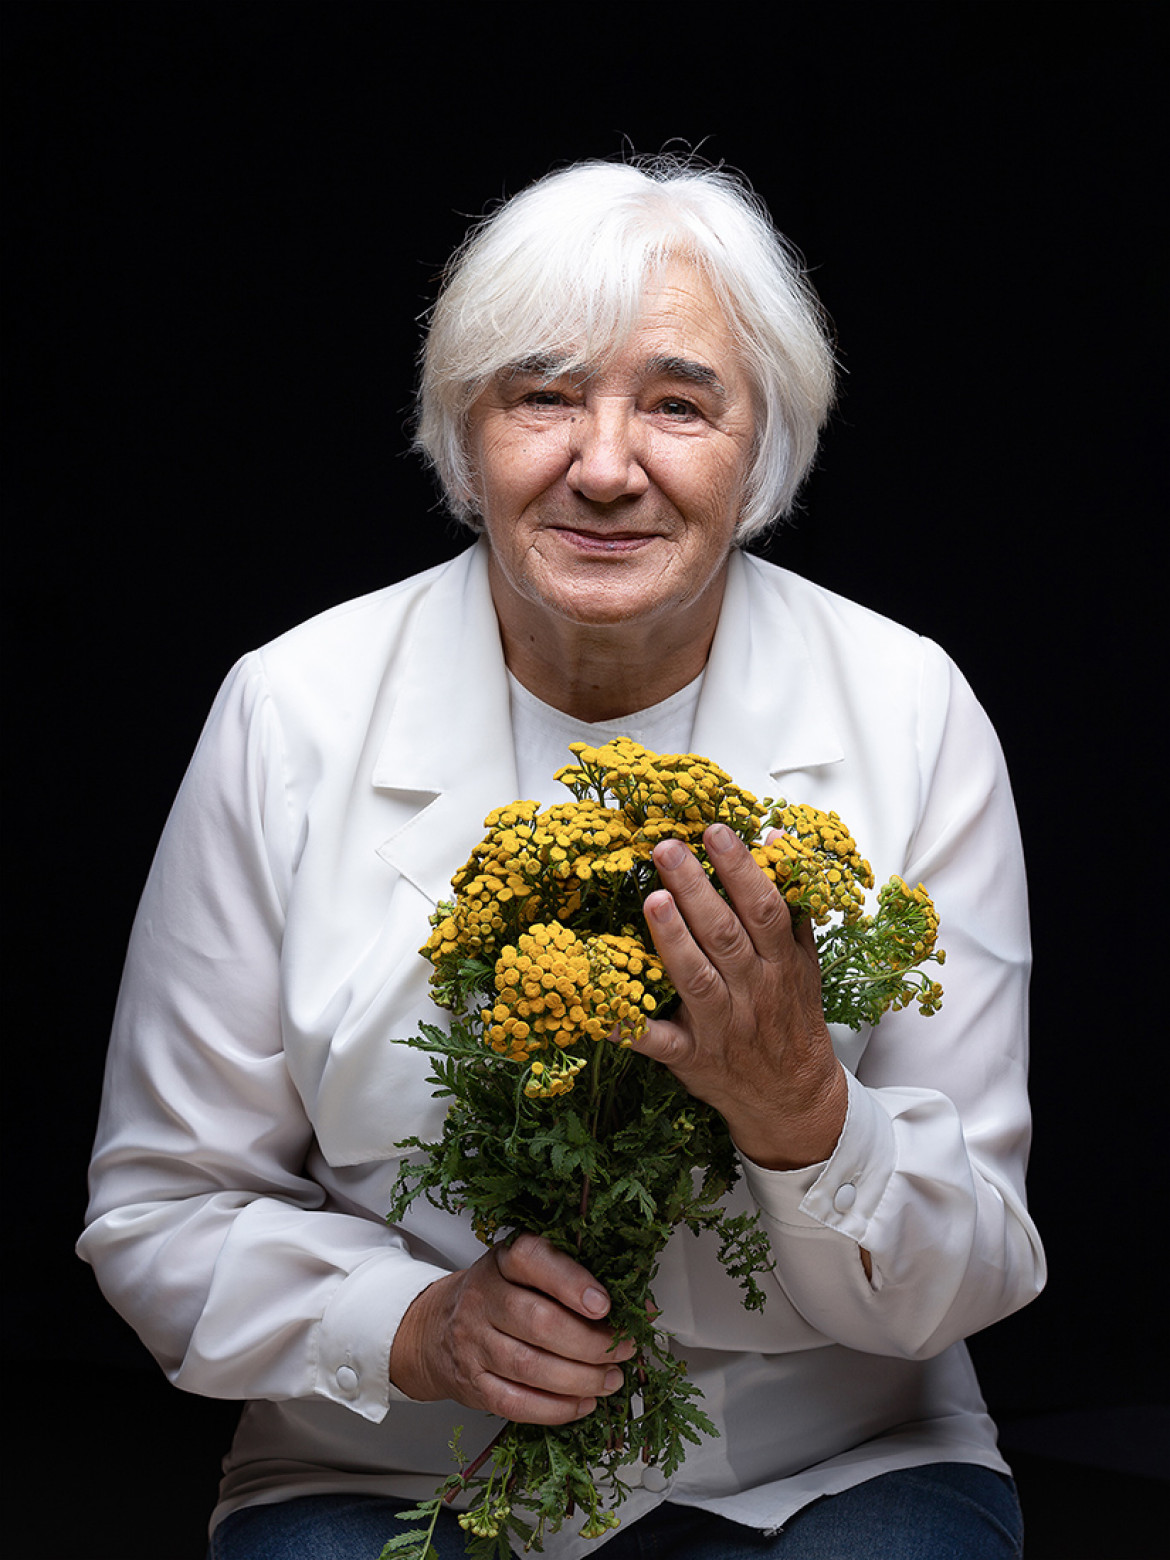 fot. Dominika Koszowska, "The Last Herb Pickers from Podlachia" (2. Miejsce w kat. People: Other) / ND Awards 2020